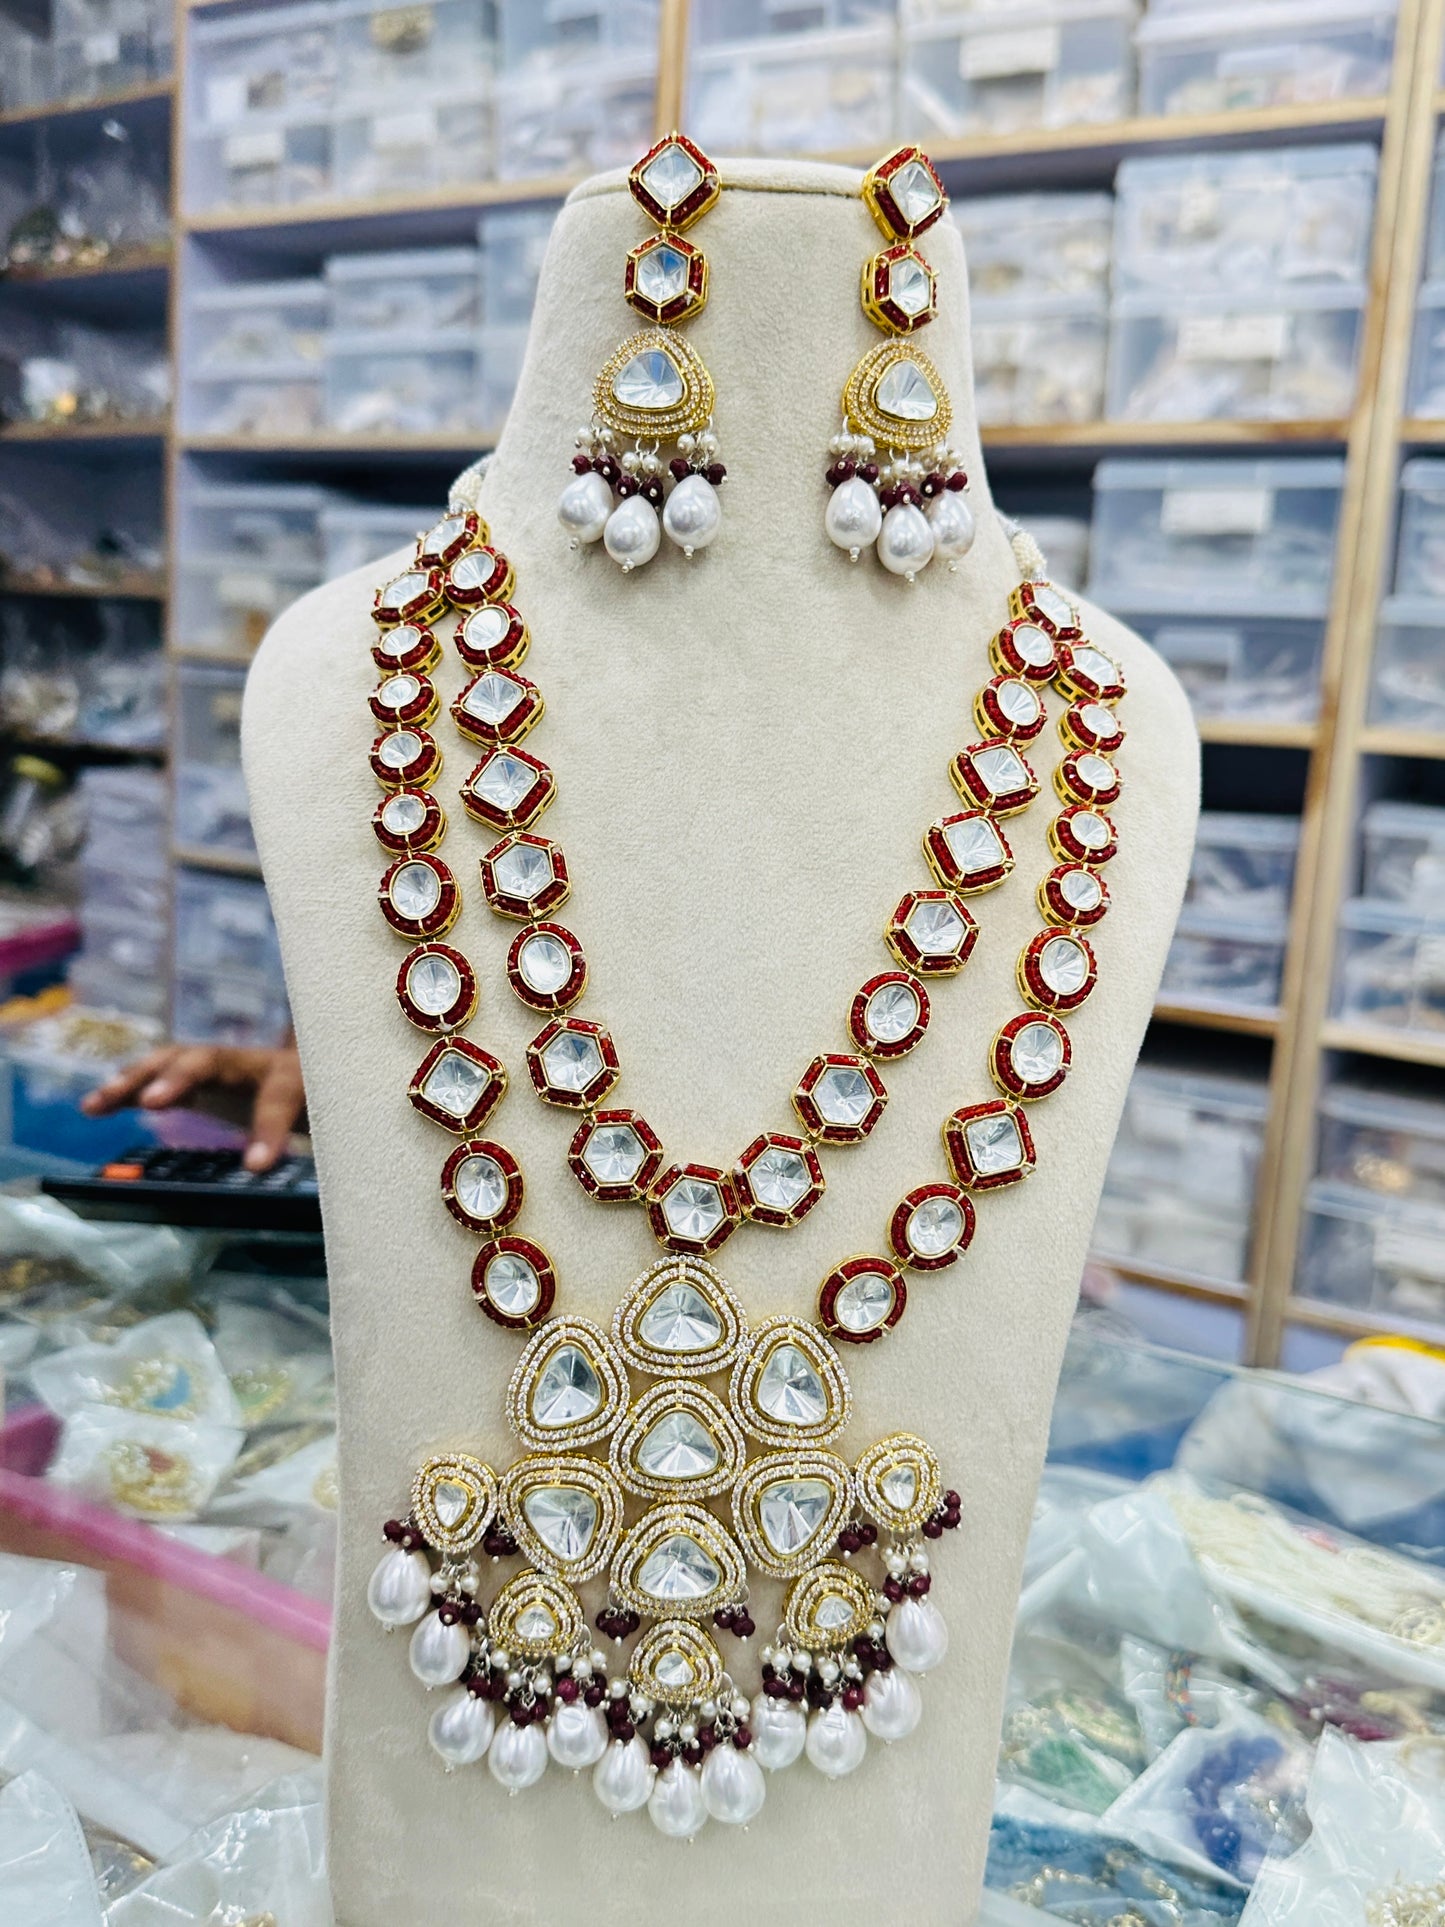 Regal Pearl Necklace Set